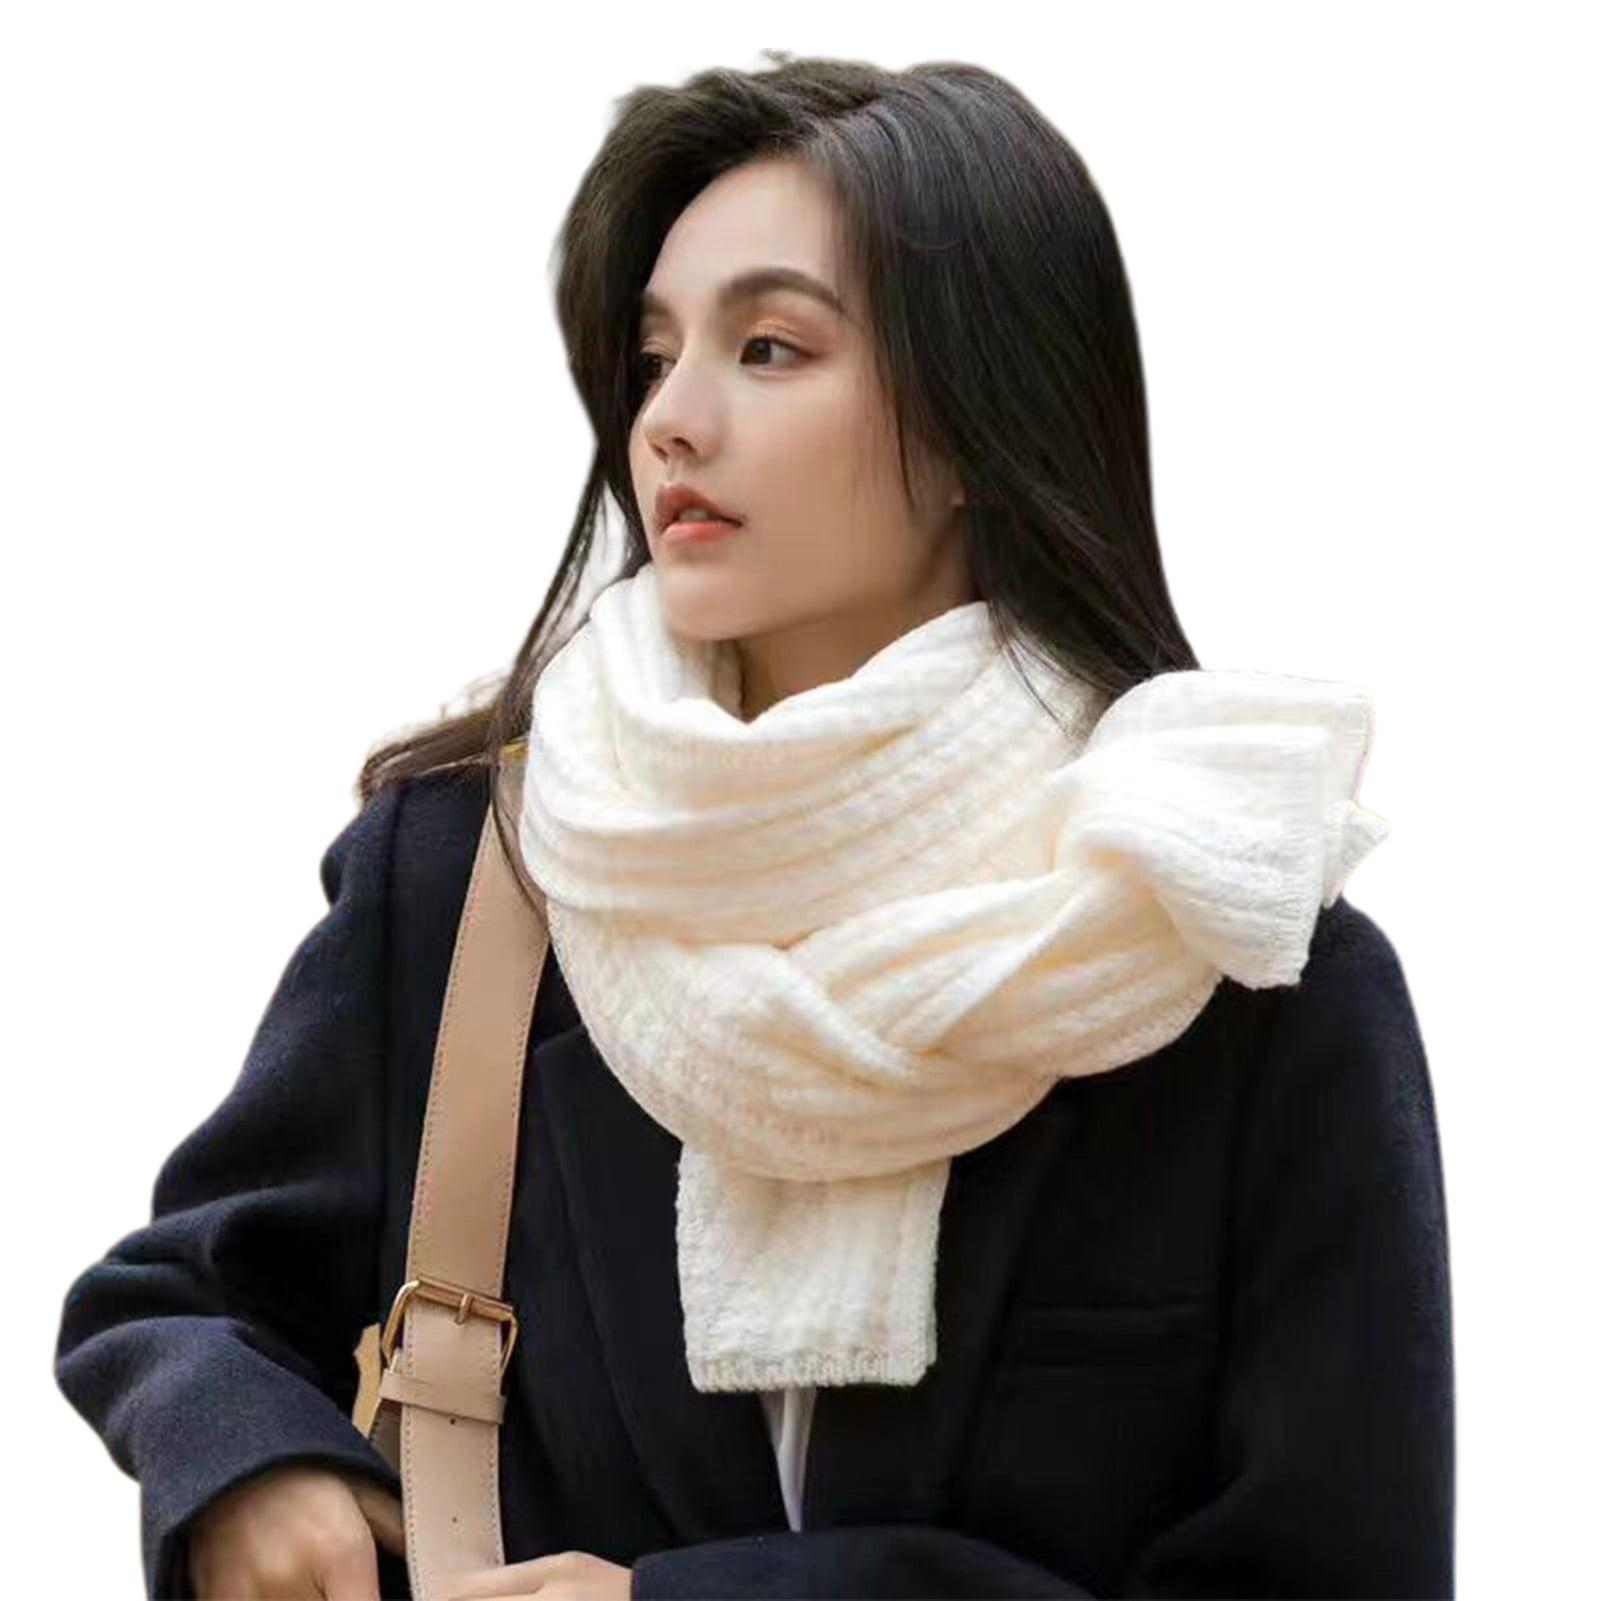 OUNIYA Women Winter Chunky Knit Scarf Thick Warm Ribbed Large Scarves Long Wrap Shawl Fleece Neck Warmer Wool Soft Fashion